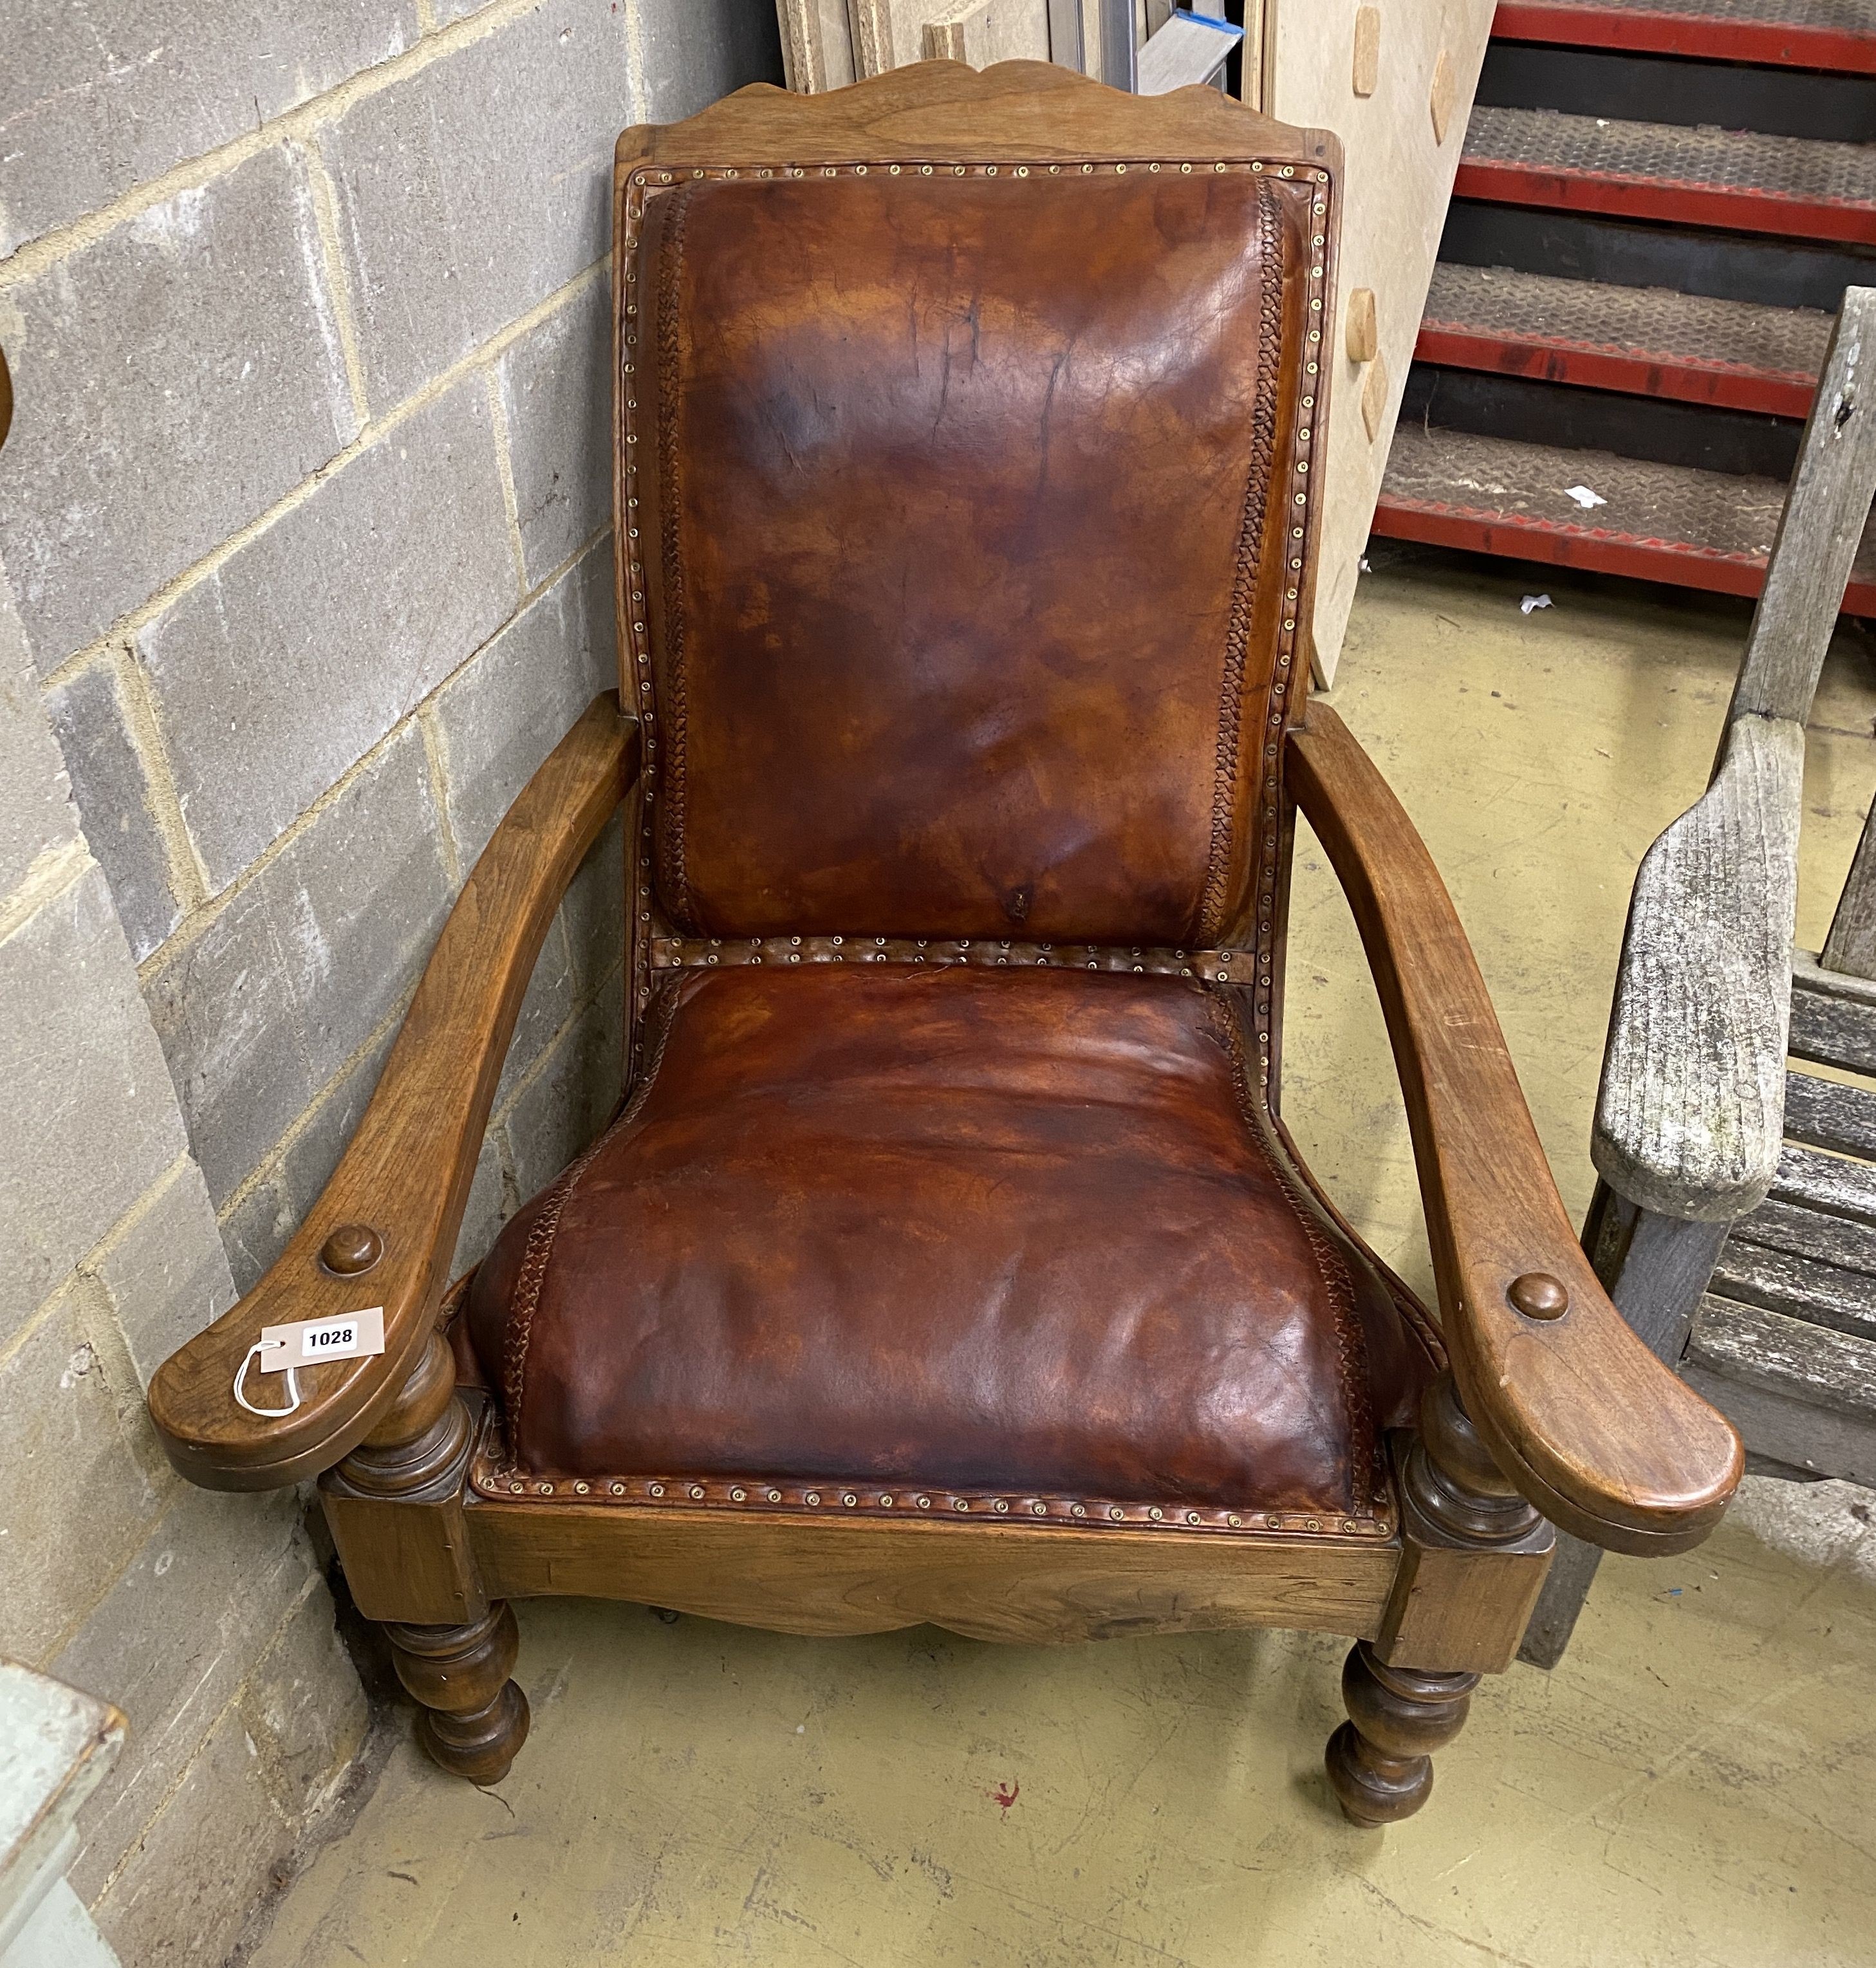 A leather upholstered hardwood plantation chair, width 91cm, depth 94cm, height 106cm